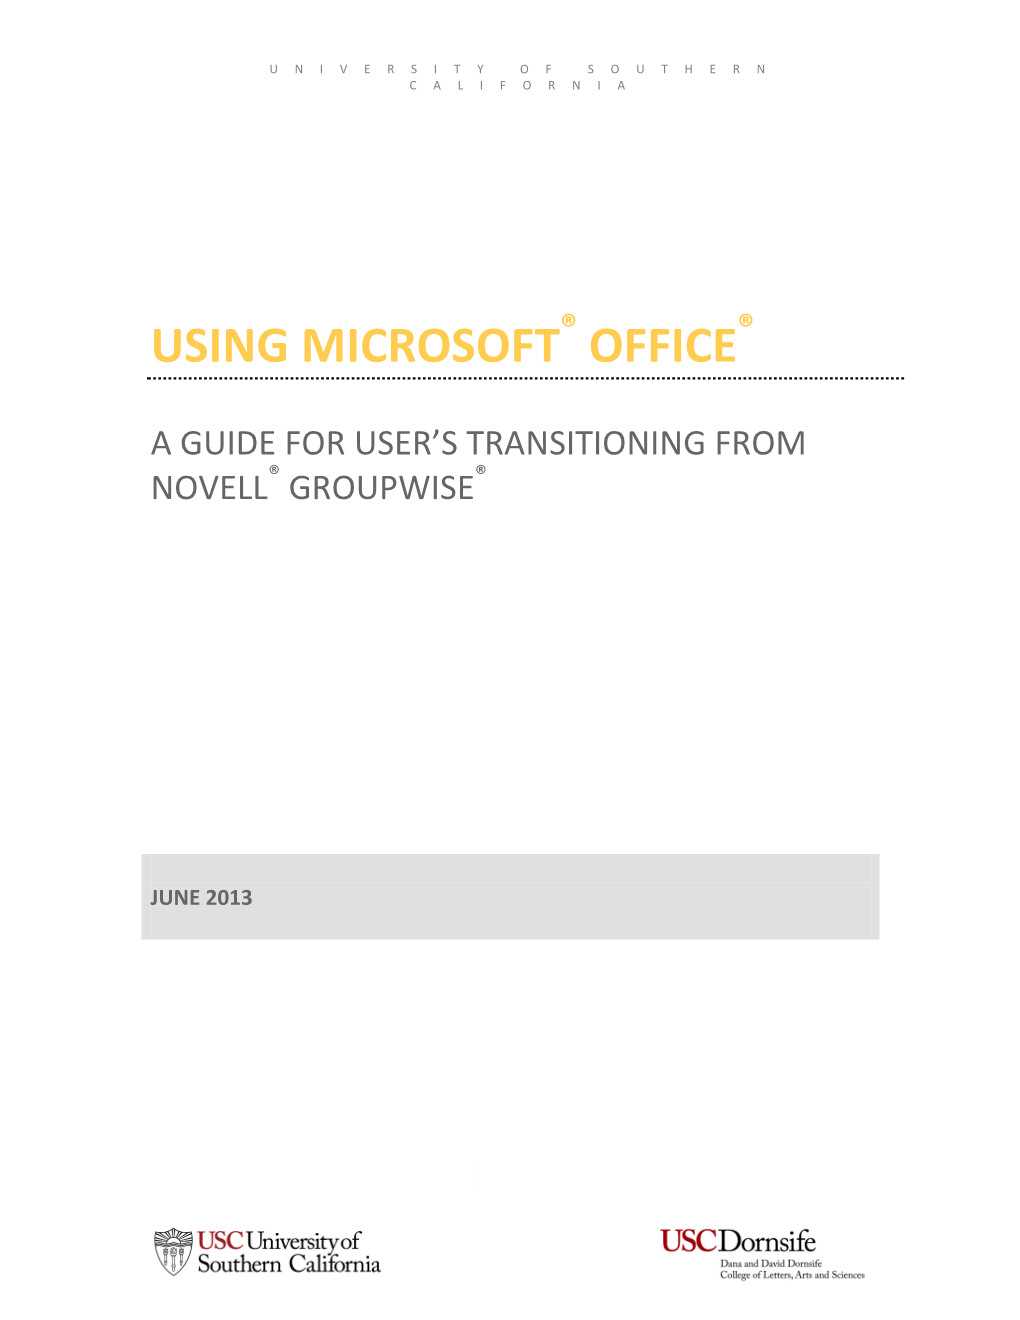 Using Microsoft Office